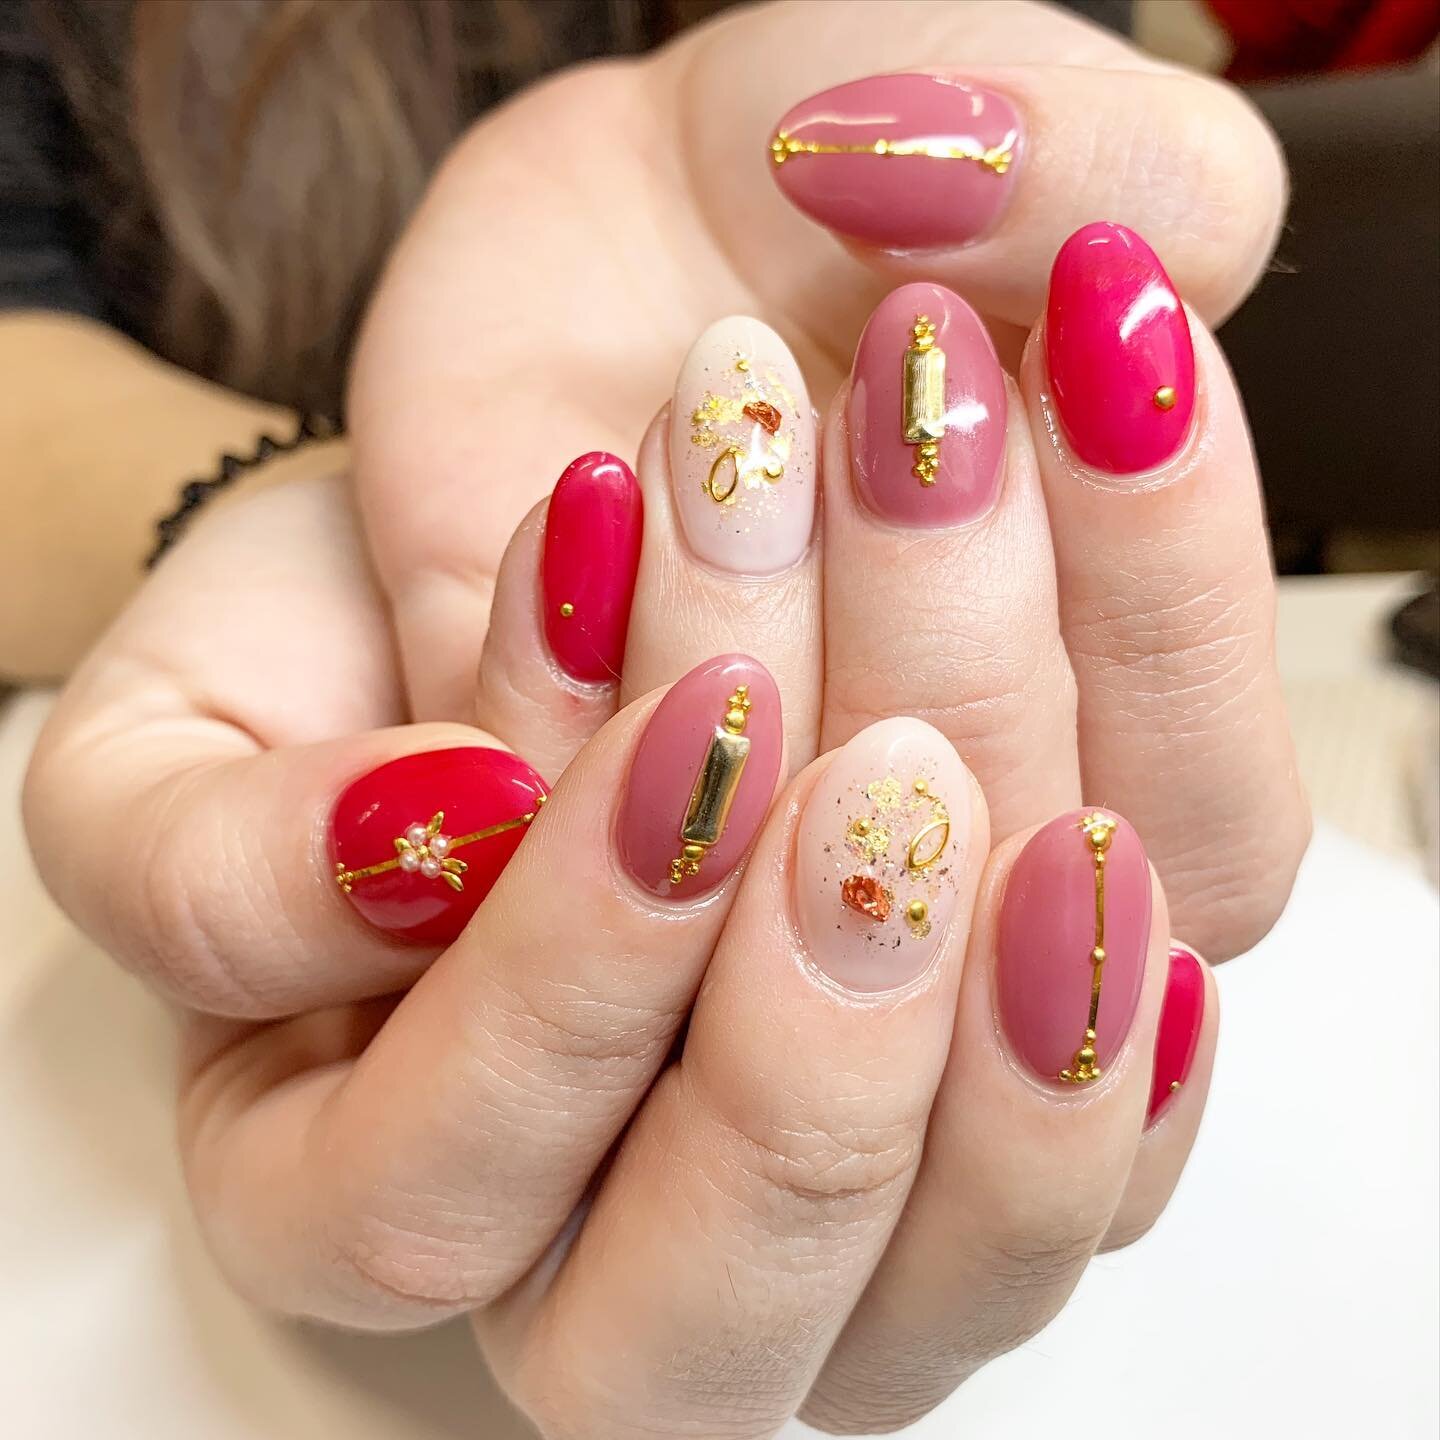 #jatelmediumart #nail #nails #nailart #gelnails #naildesigns #nailart #instanail #nailoftheday #japanesenailart #handpainted #nailofinstagram #nailartaddicted #fashion #beauty #style